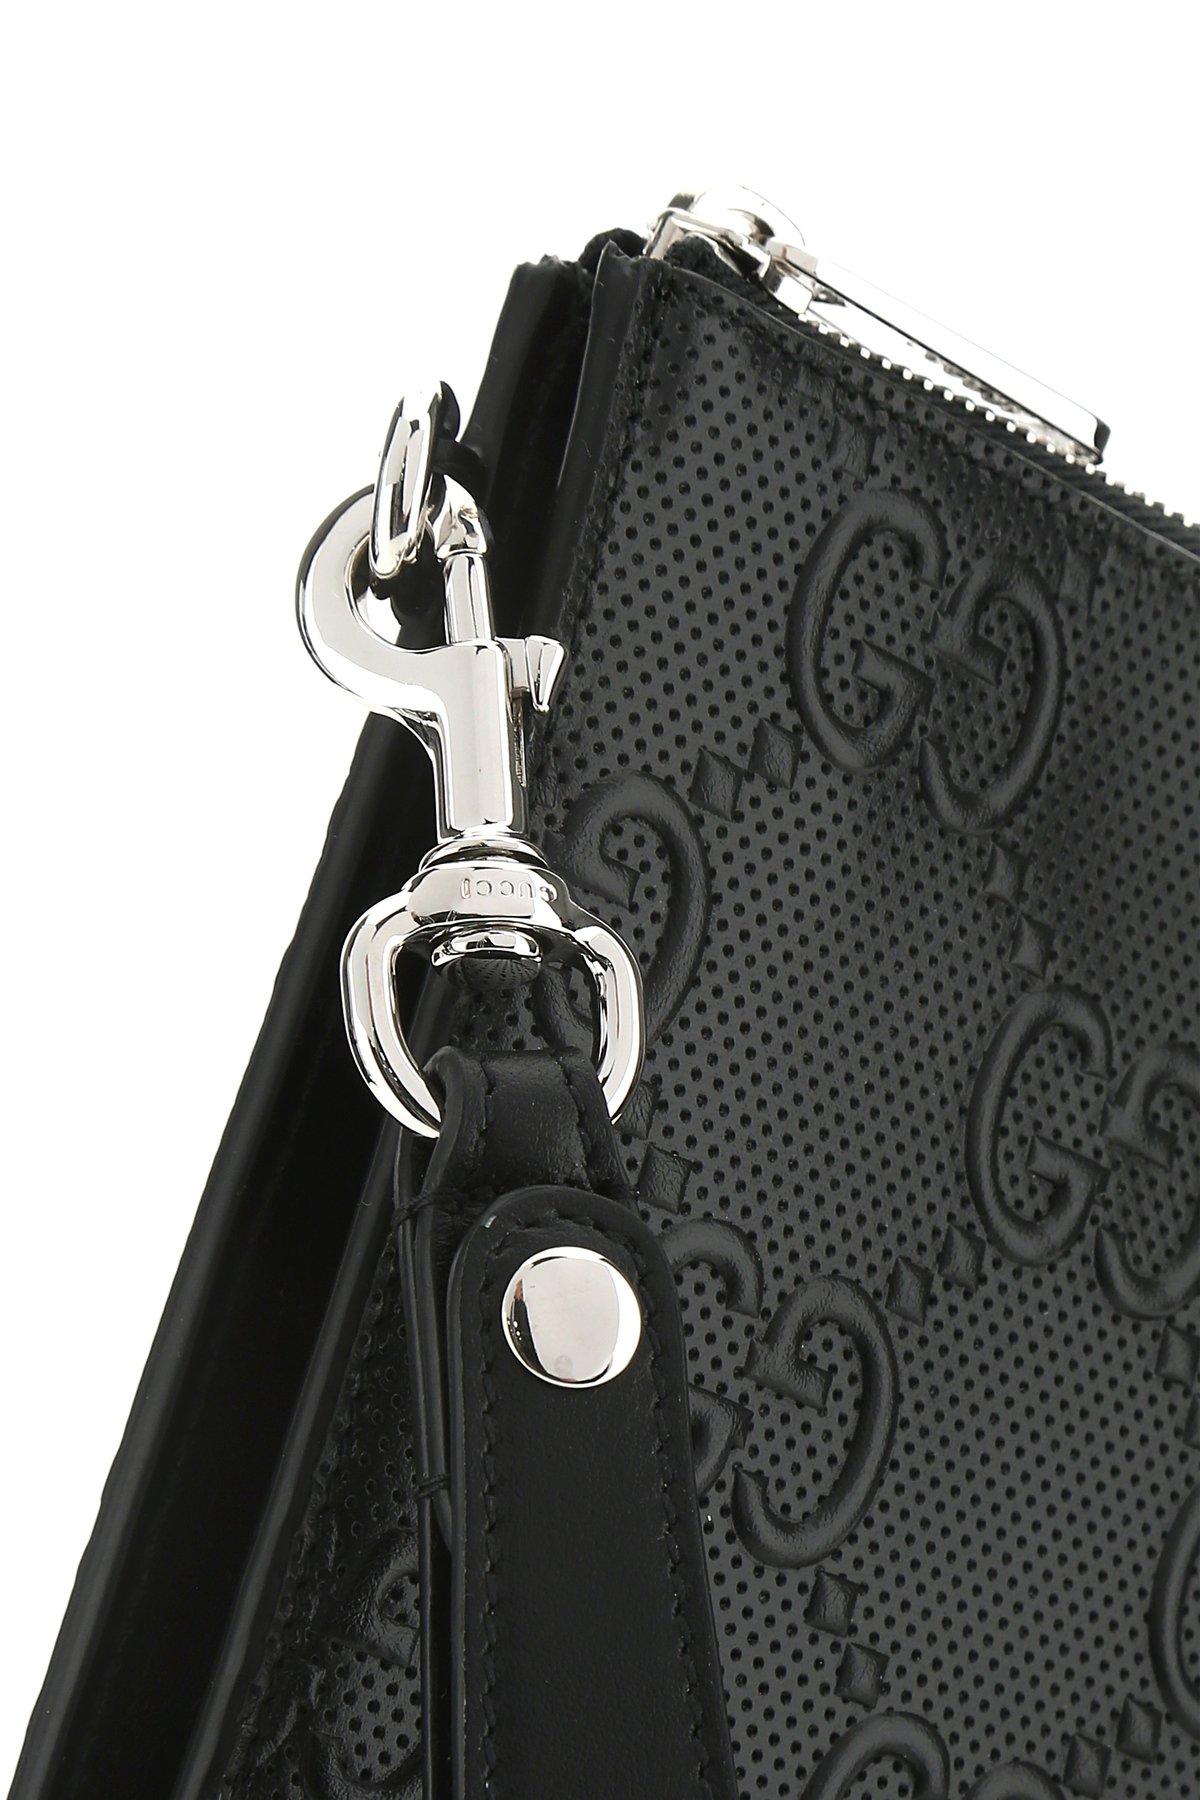 Gucci Signature Monogram Clutch Bag in Black for Men